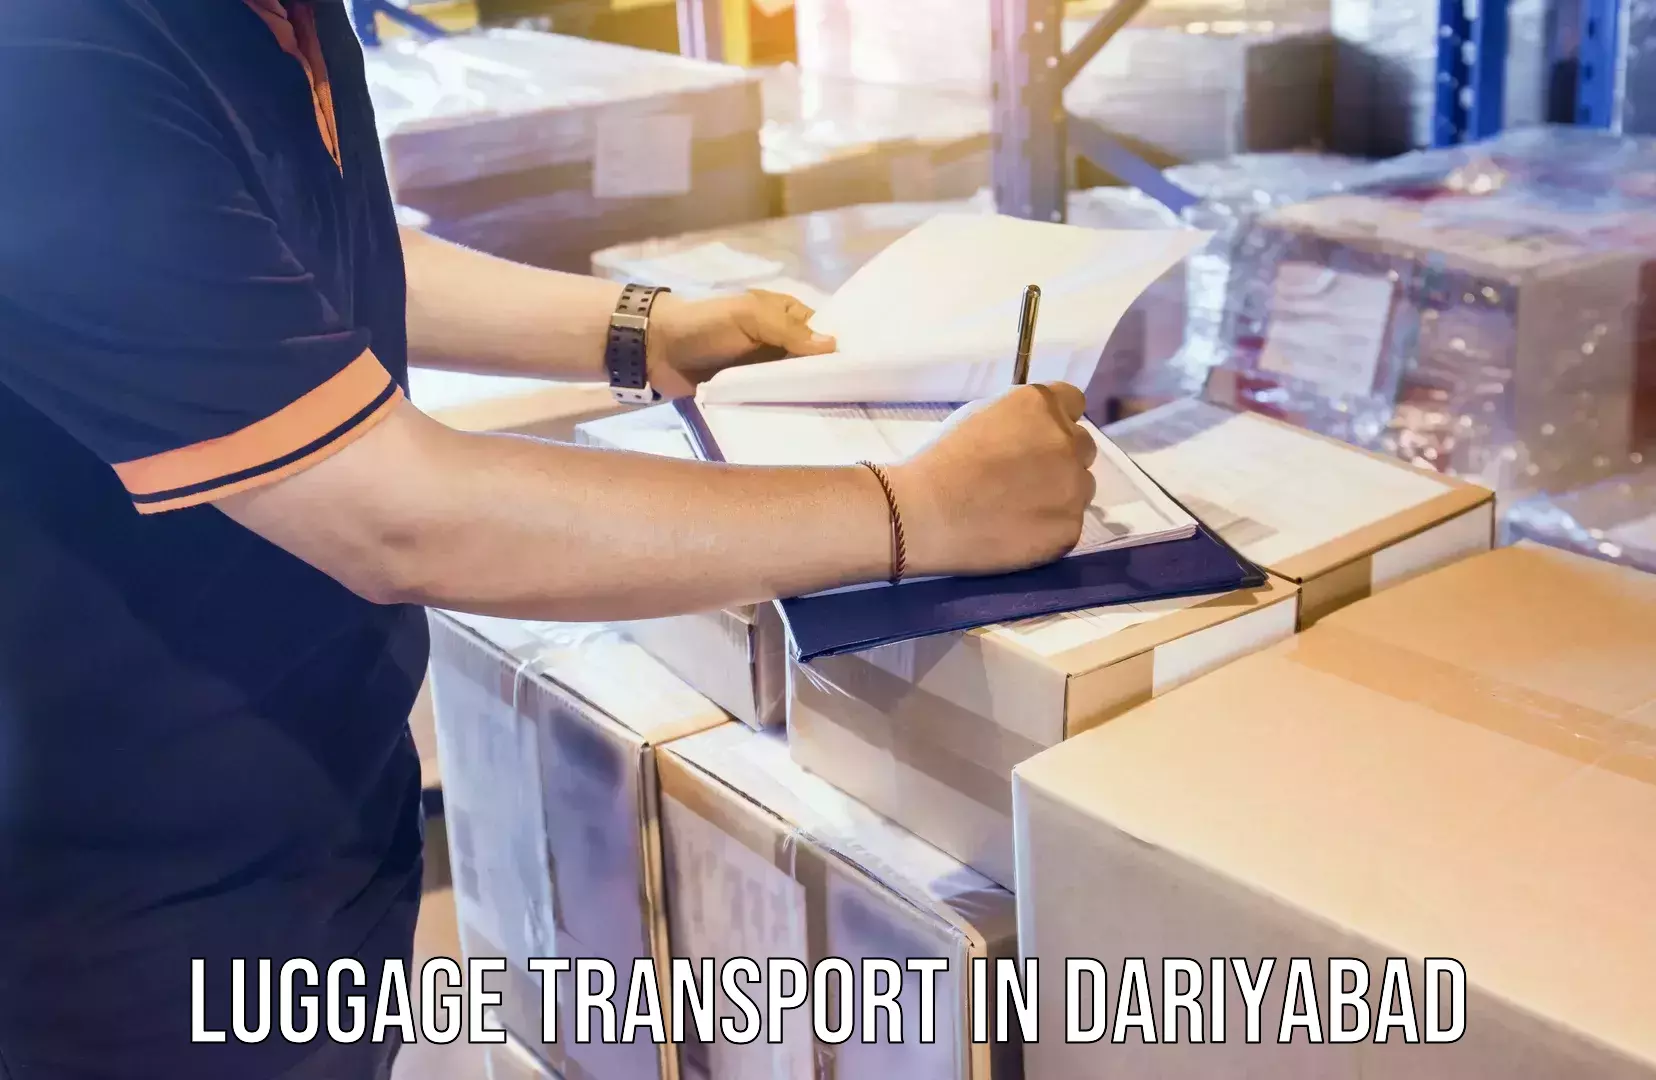 Luggage delivery news in Dariyabad